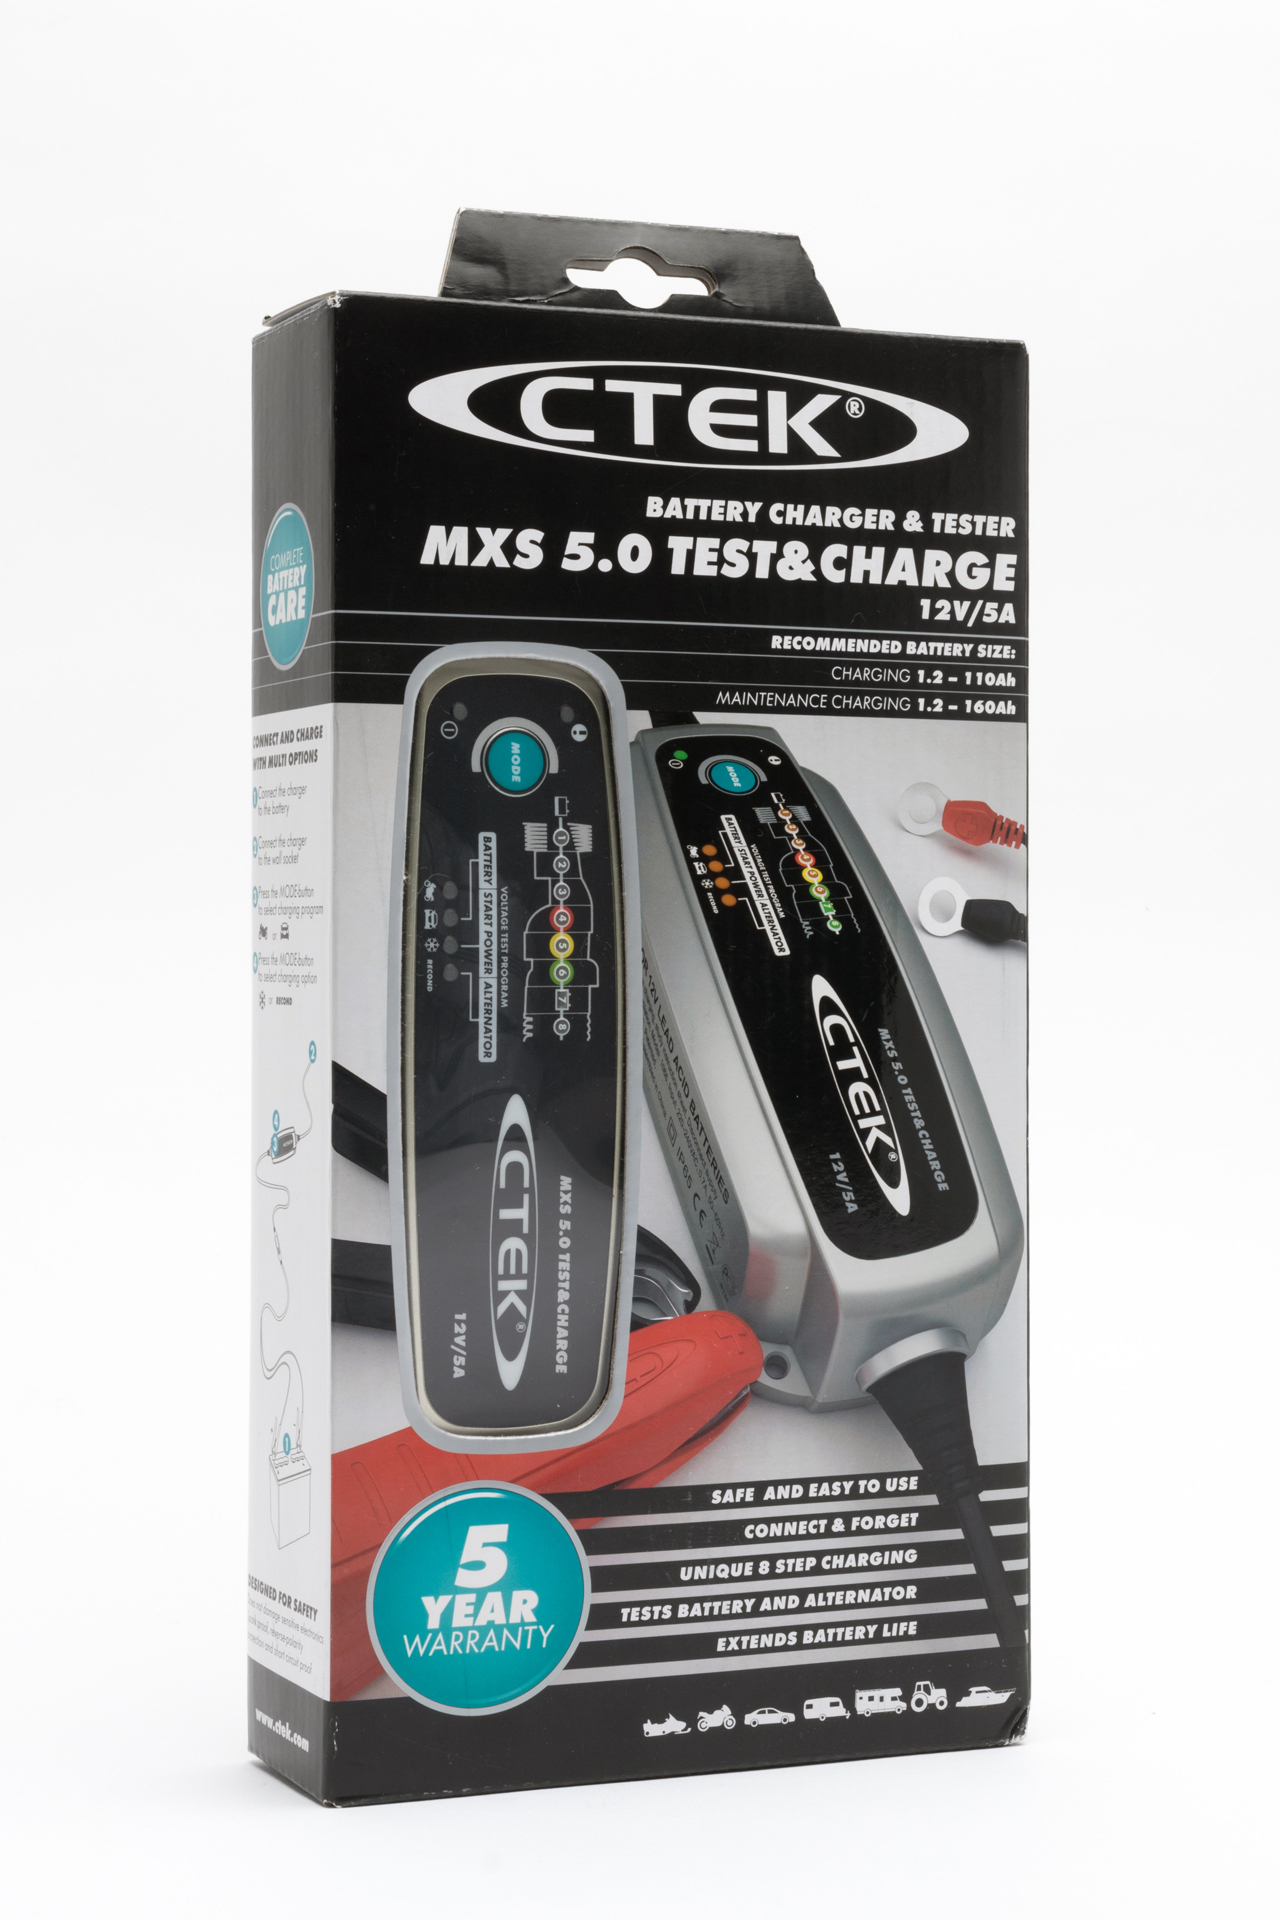 MXS 5.0 TEST&CHARGE для зарядки и теста аккумулятора